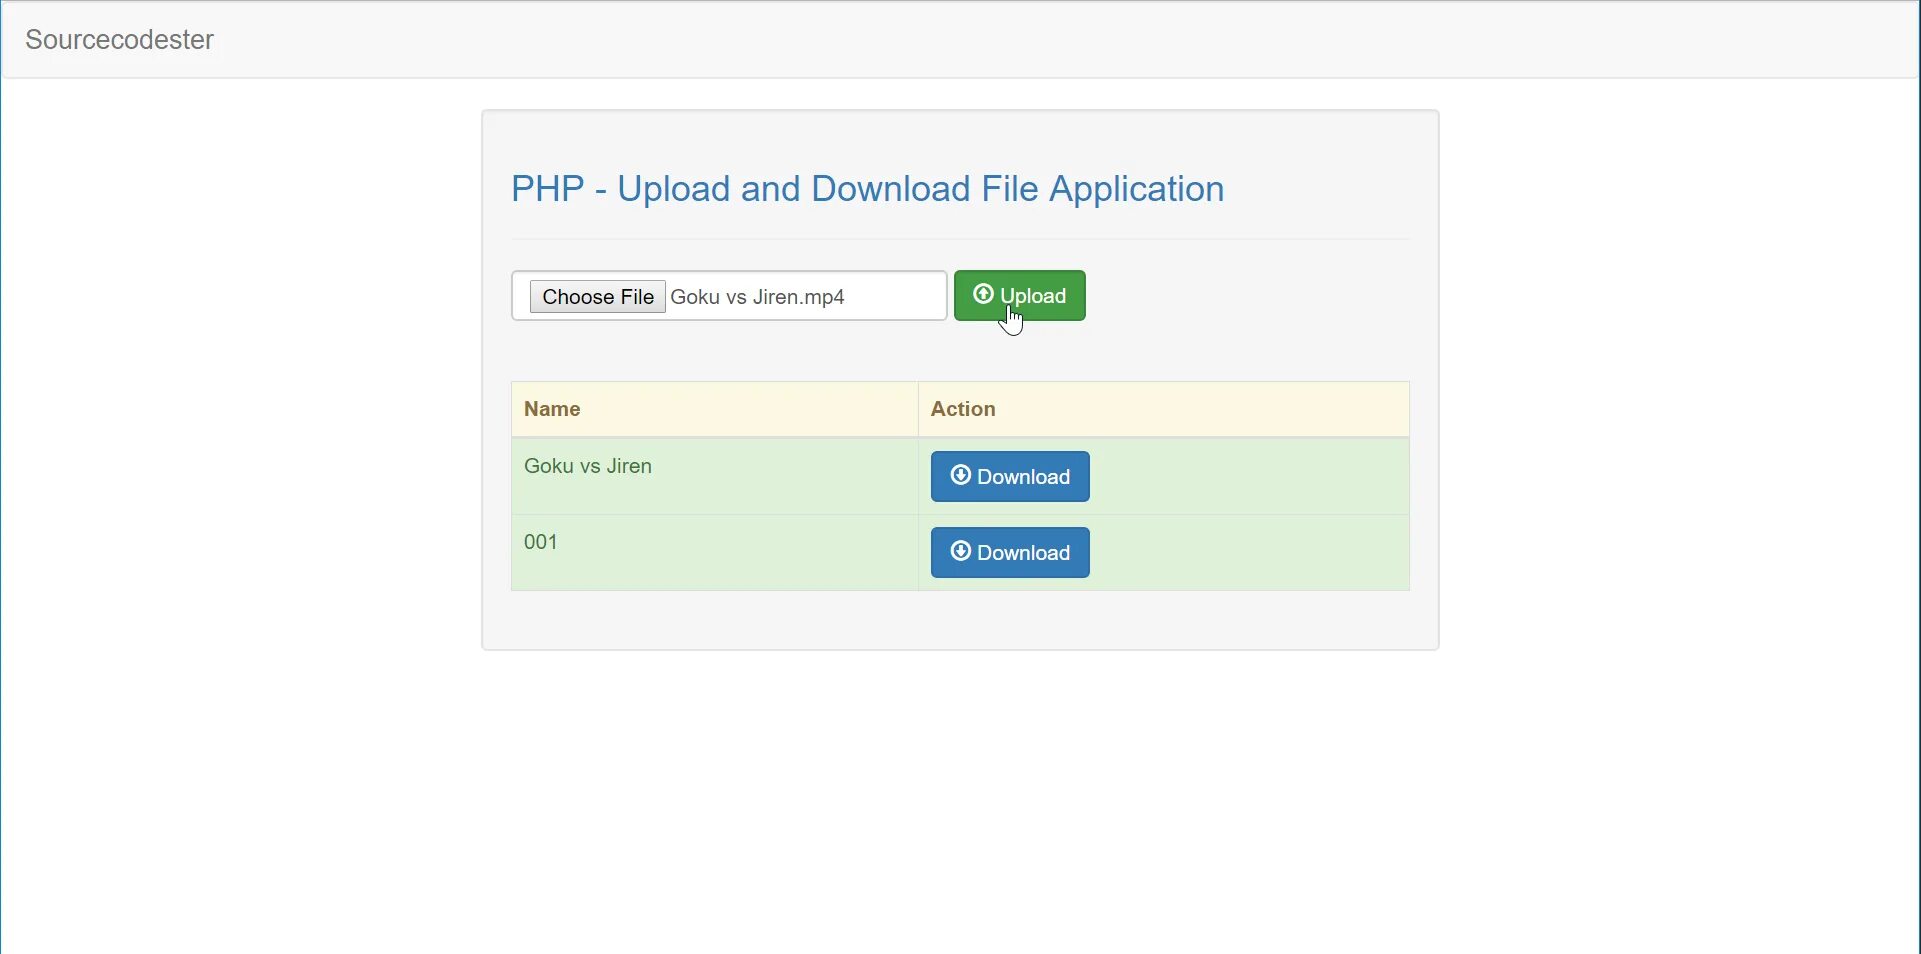 Загрузка файлов на сервер php. Php файл. Php - upload and download file application. Скрипт загрузки файлов.